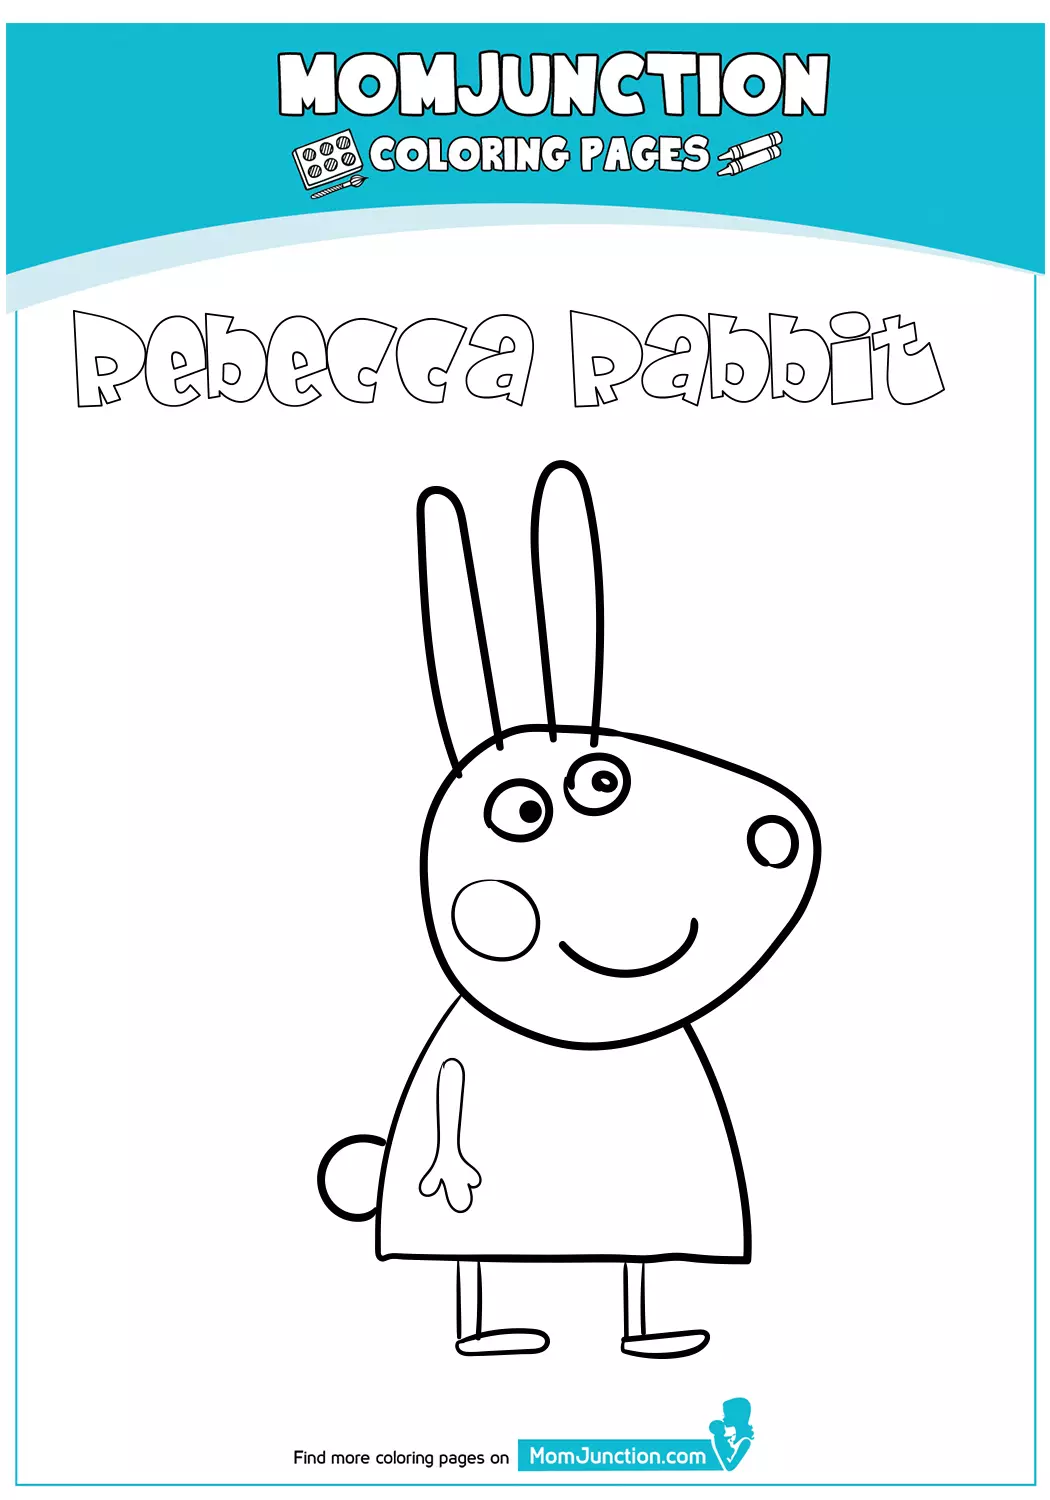 Rebecca-Rabbit